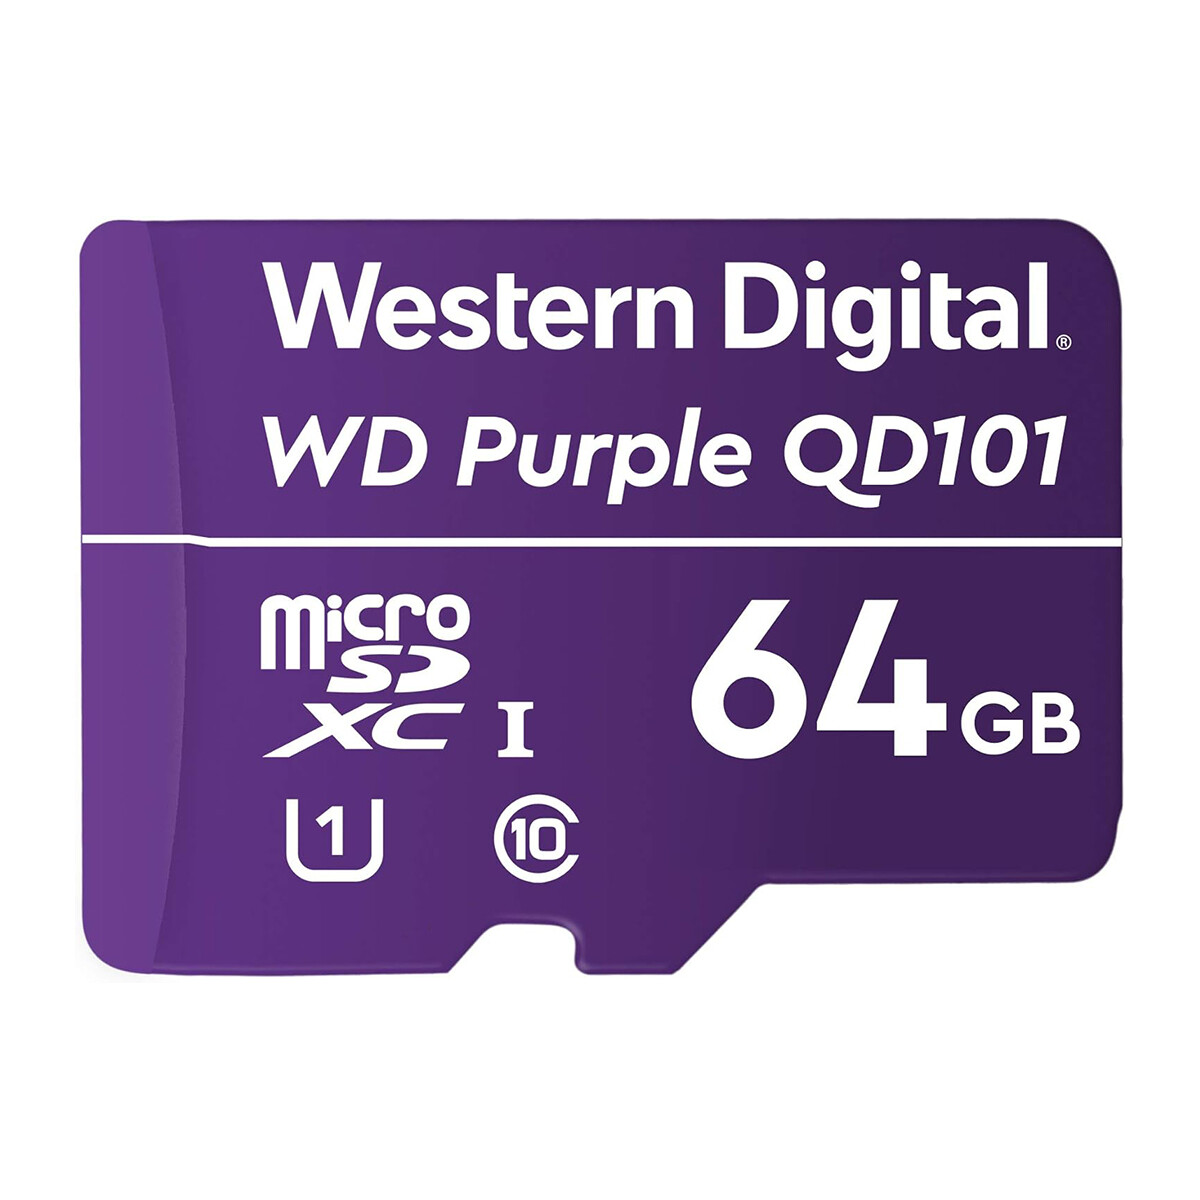 Tarjeta de Memoria microSDXC Western Digital 64GB Purple Clase 10 para Cámaras - Purpura 